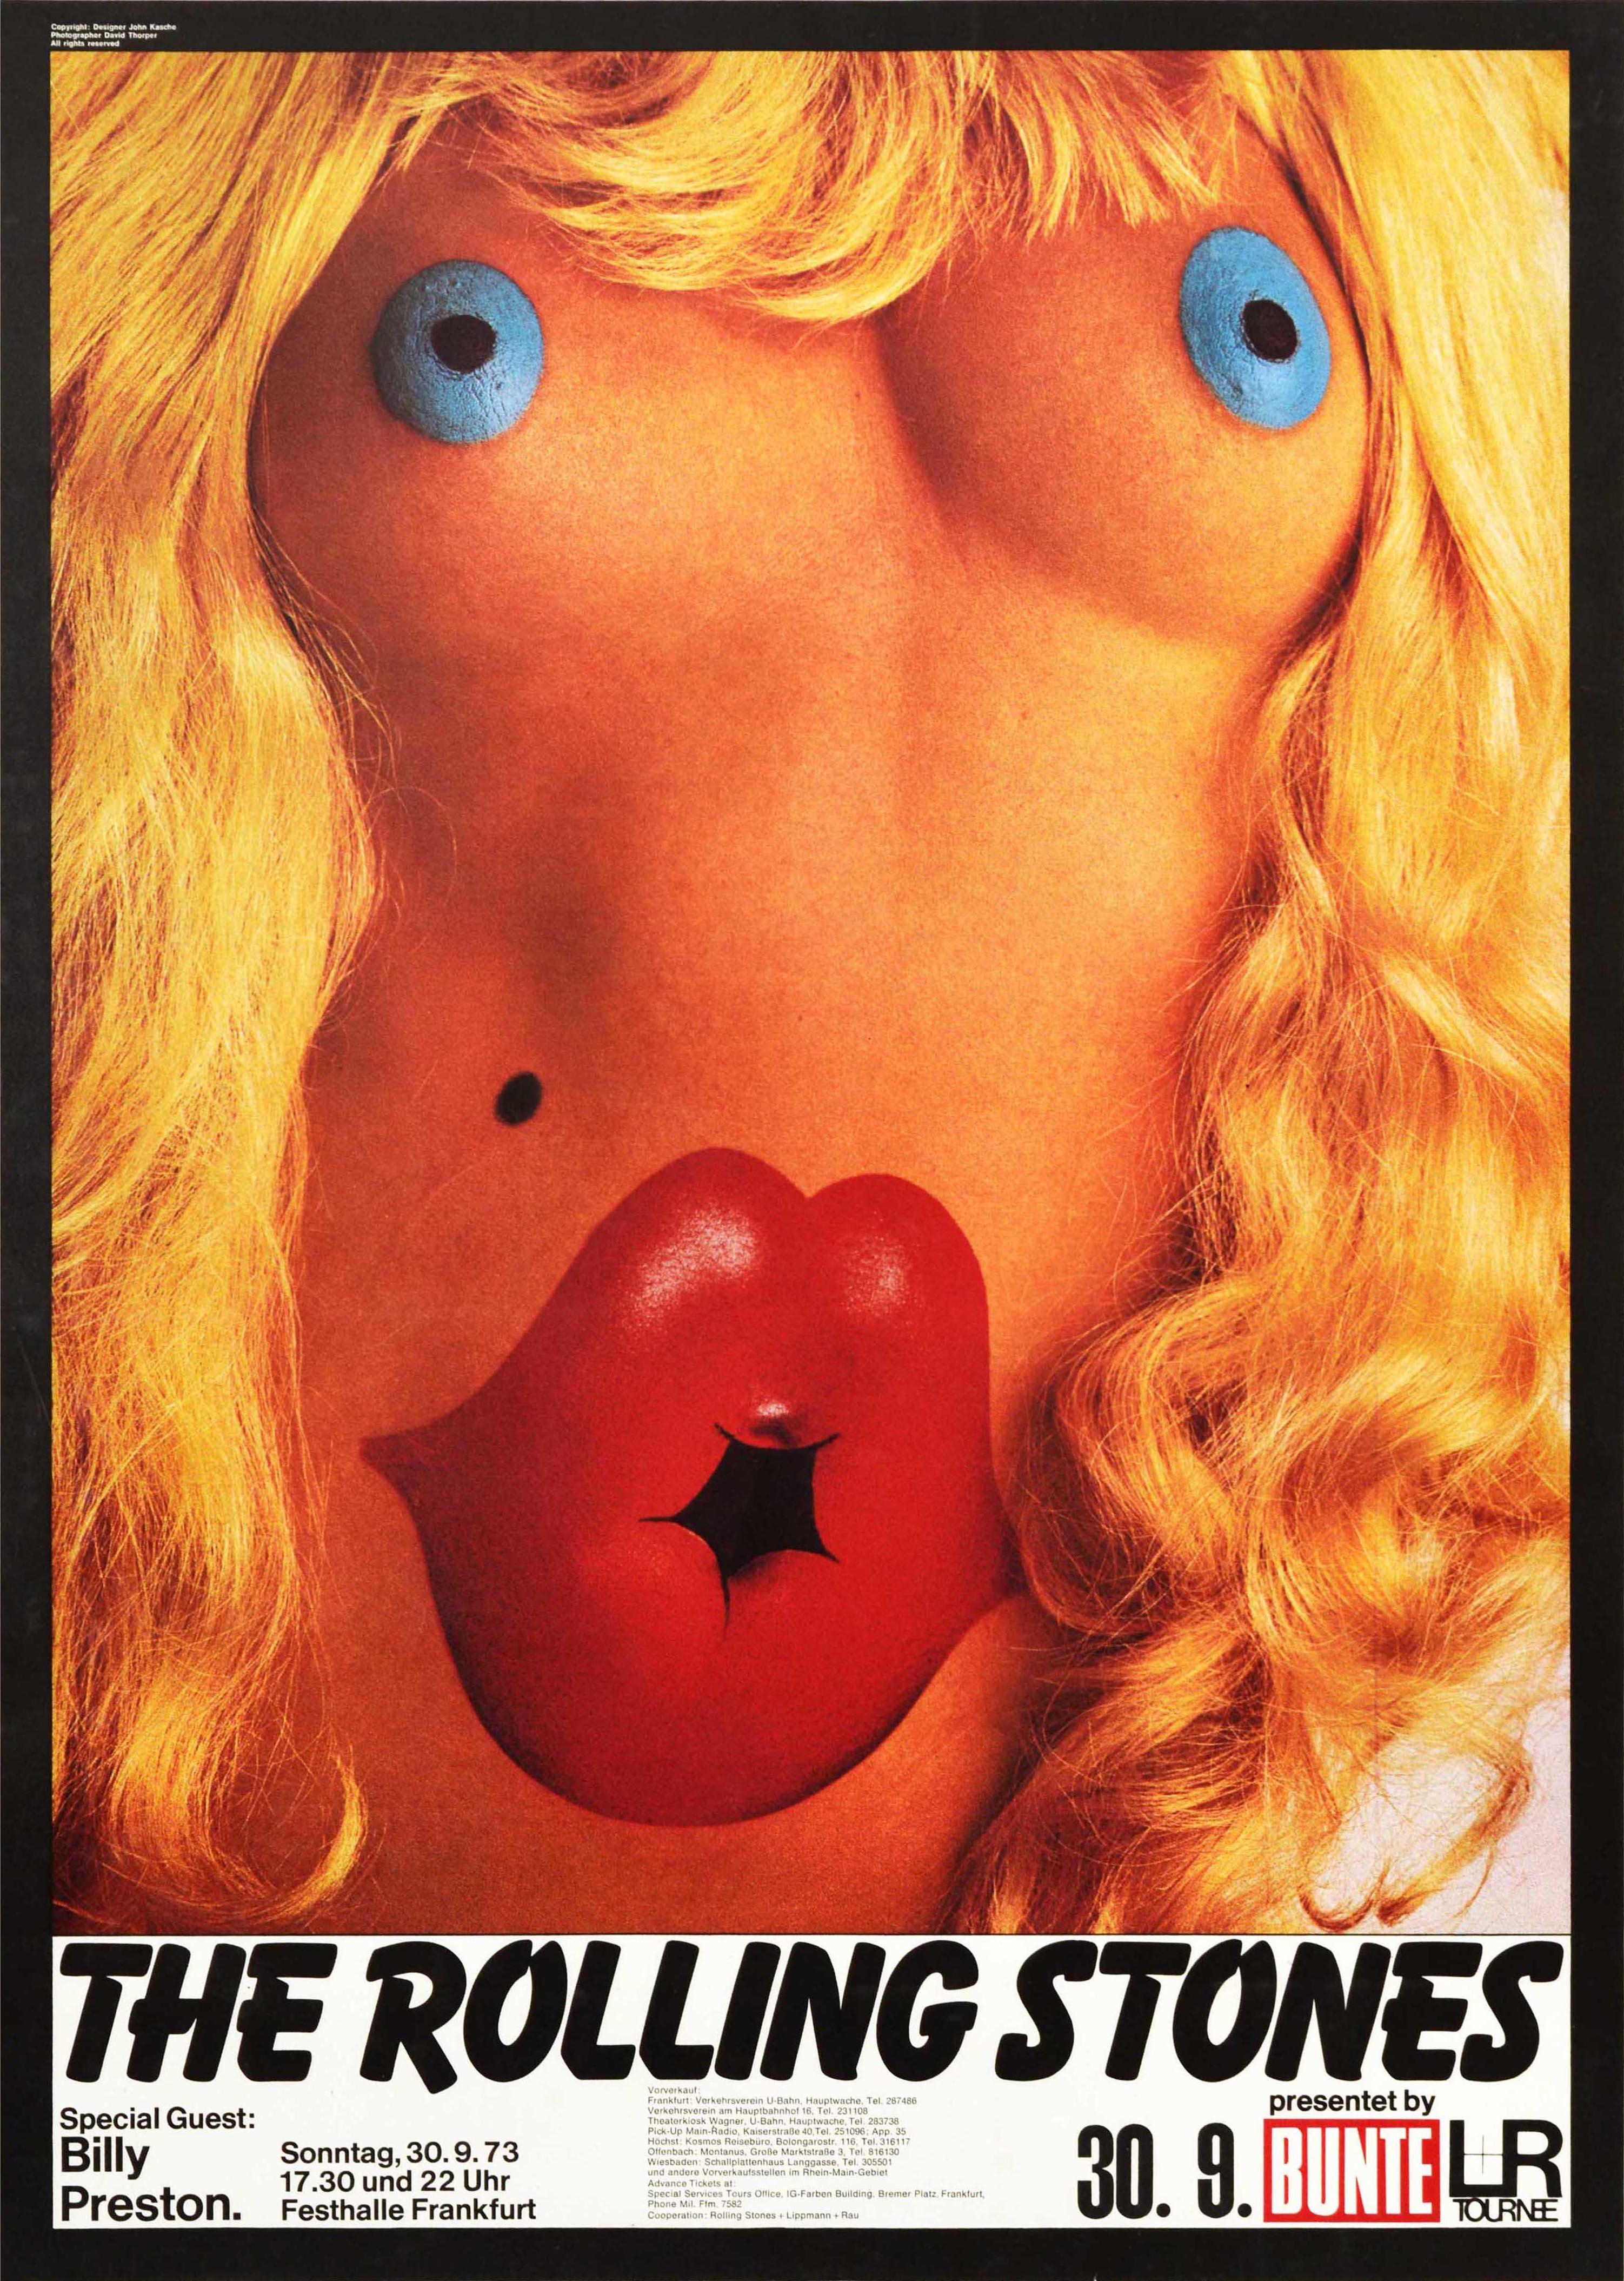 John Pasche David Thorpe Print - Original Vintage Poster The Rolling Stones Billy Preston 73 Nude Blonde Hot Lips